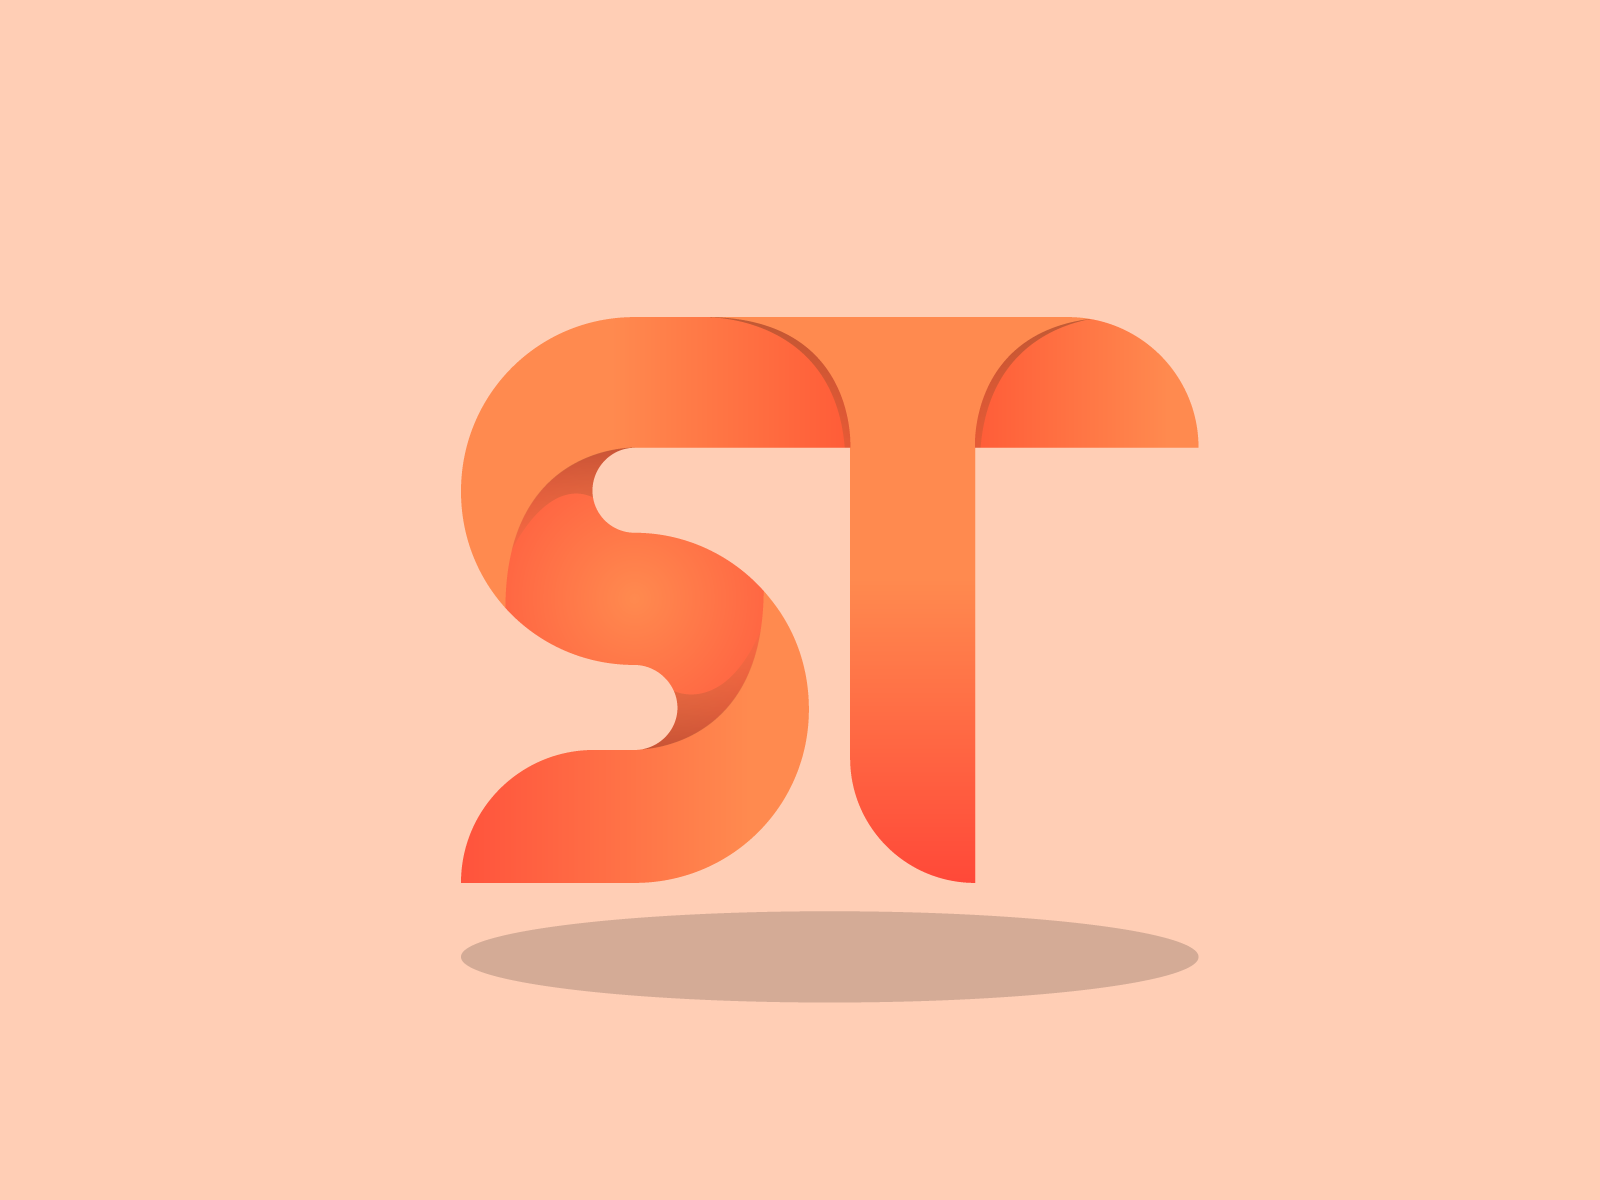 ST monogram logo by Emo Stanchev on Dribbble